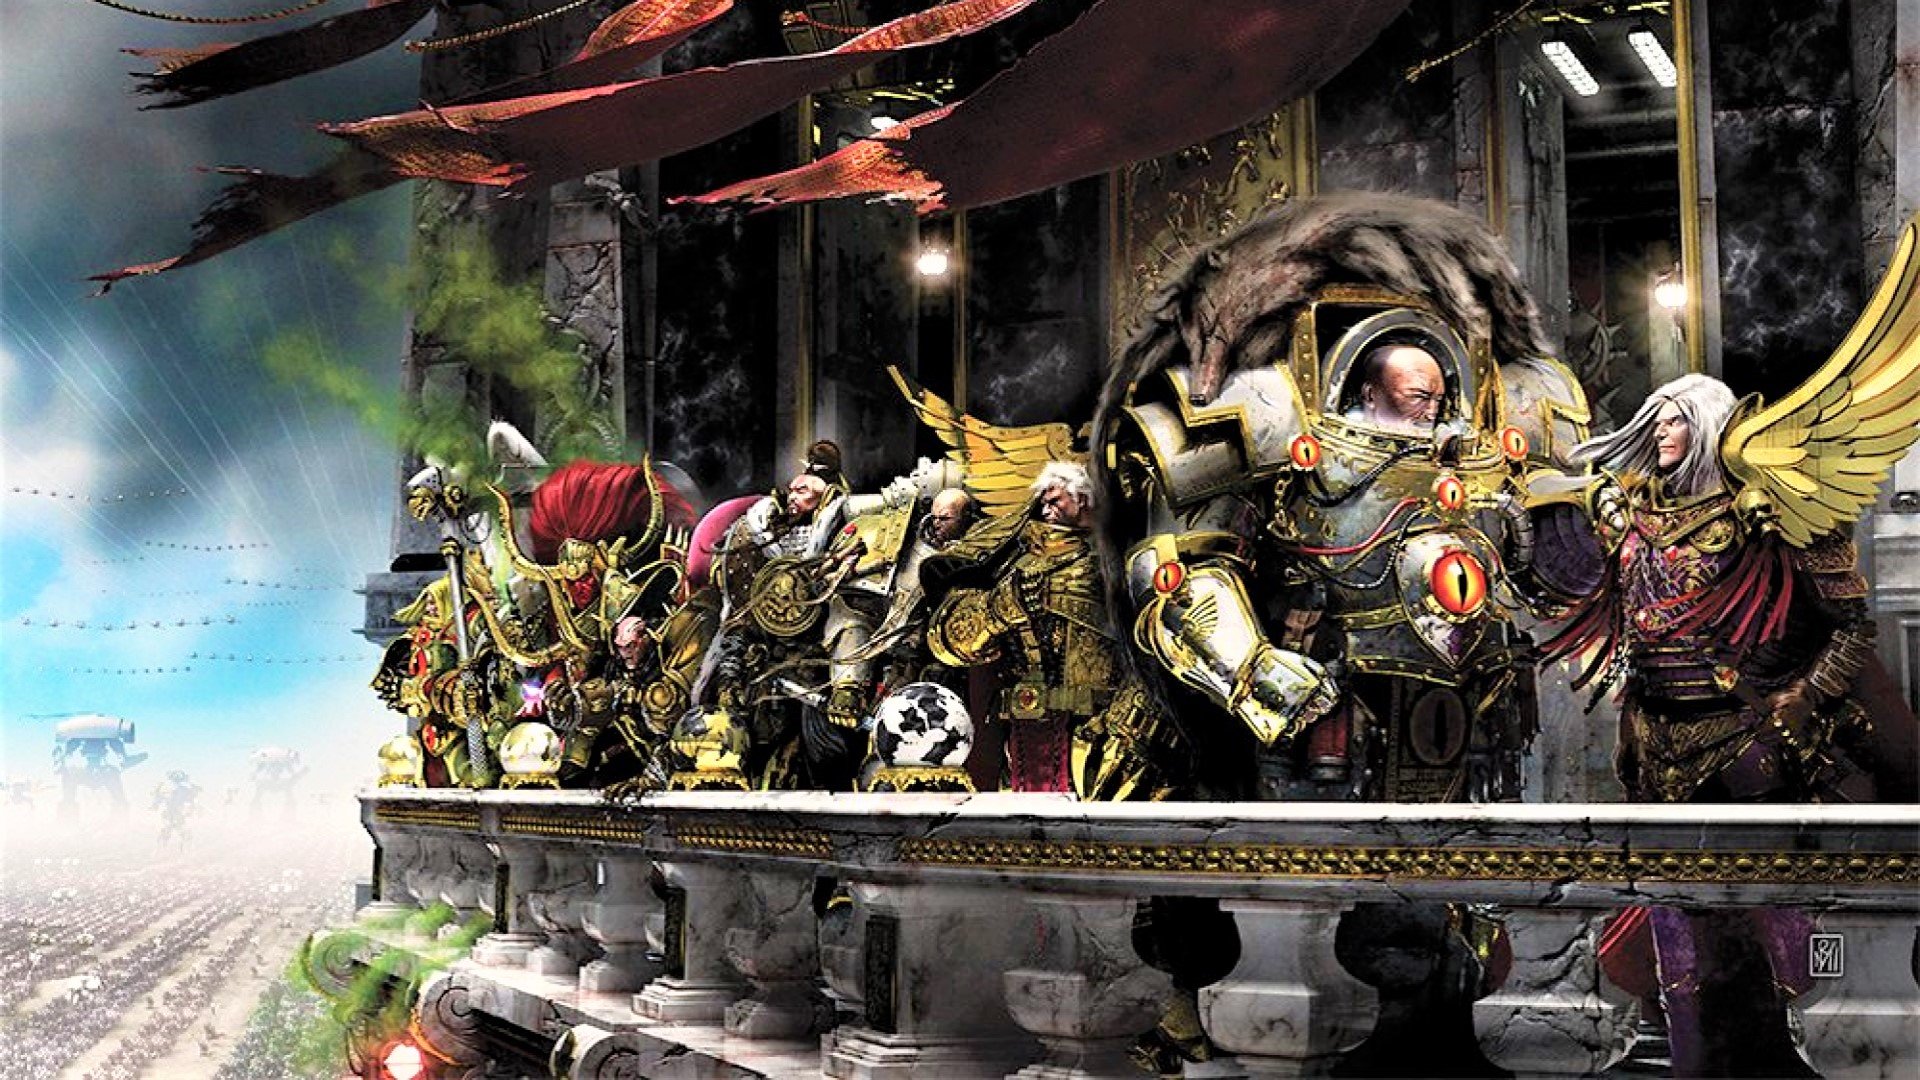 Warhammer 40k Space Marines - Warhammer Community artwork showing the Primarchs at the Ullanor Triumph